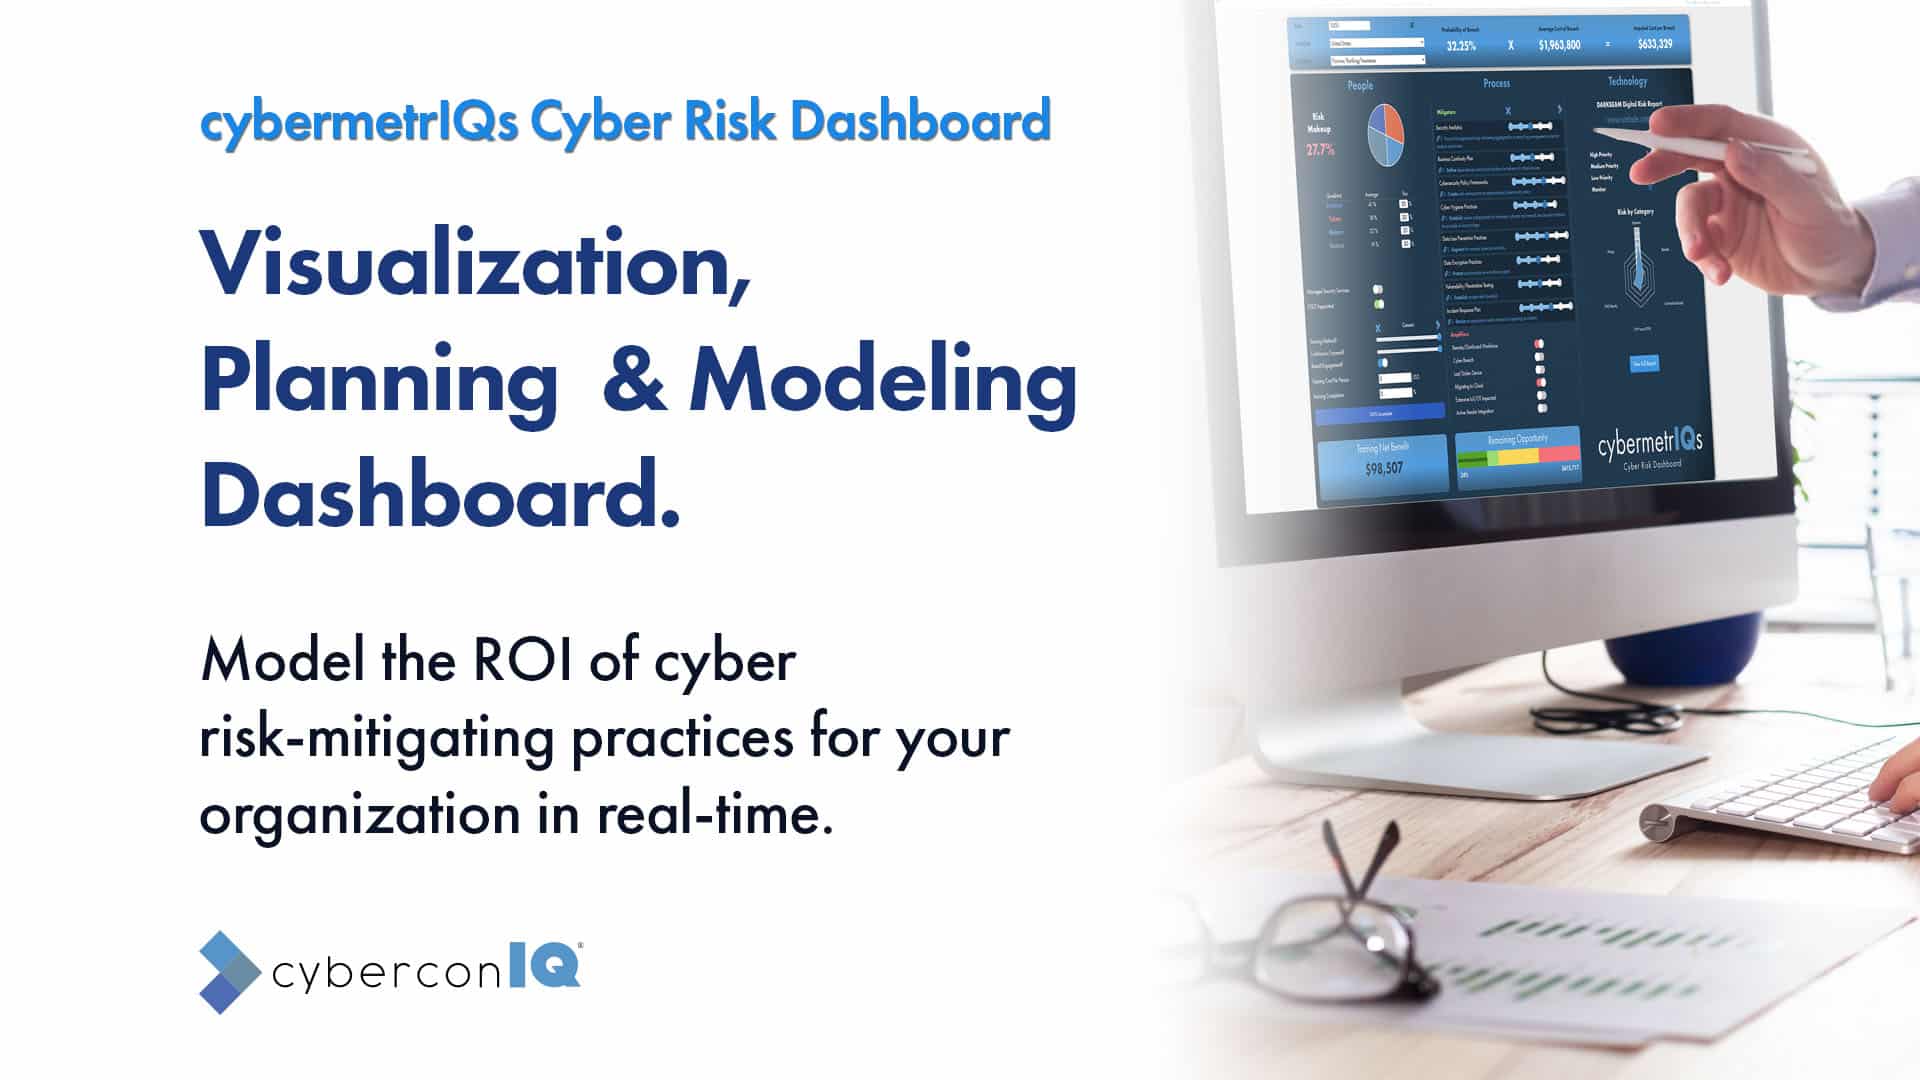 cybermetrIQs Cyber Risk Dashboard cover